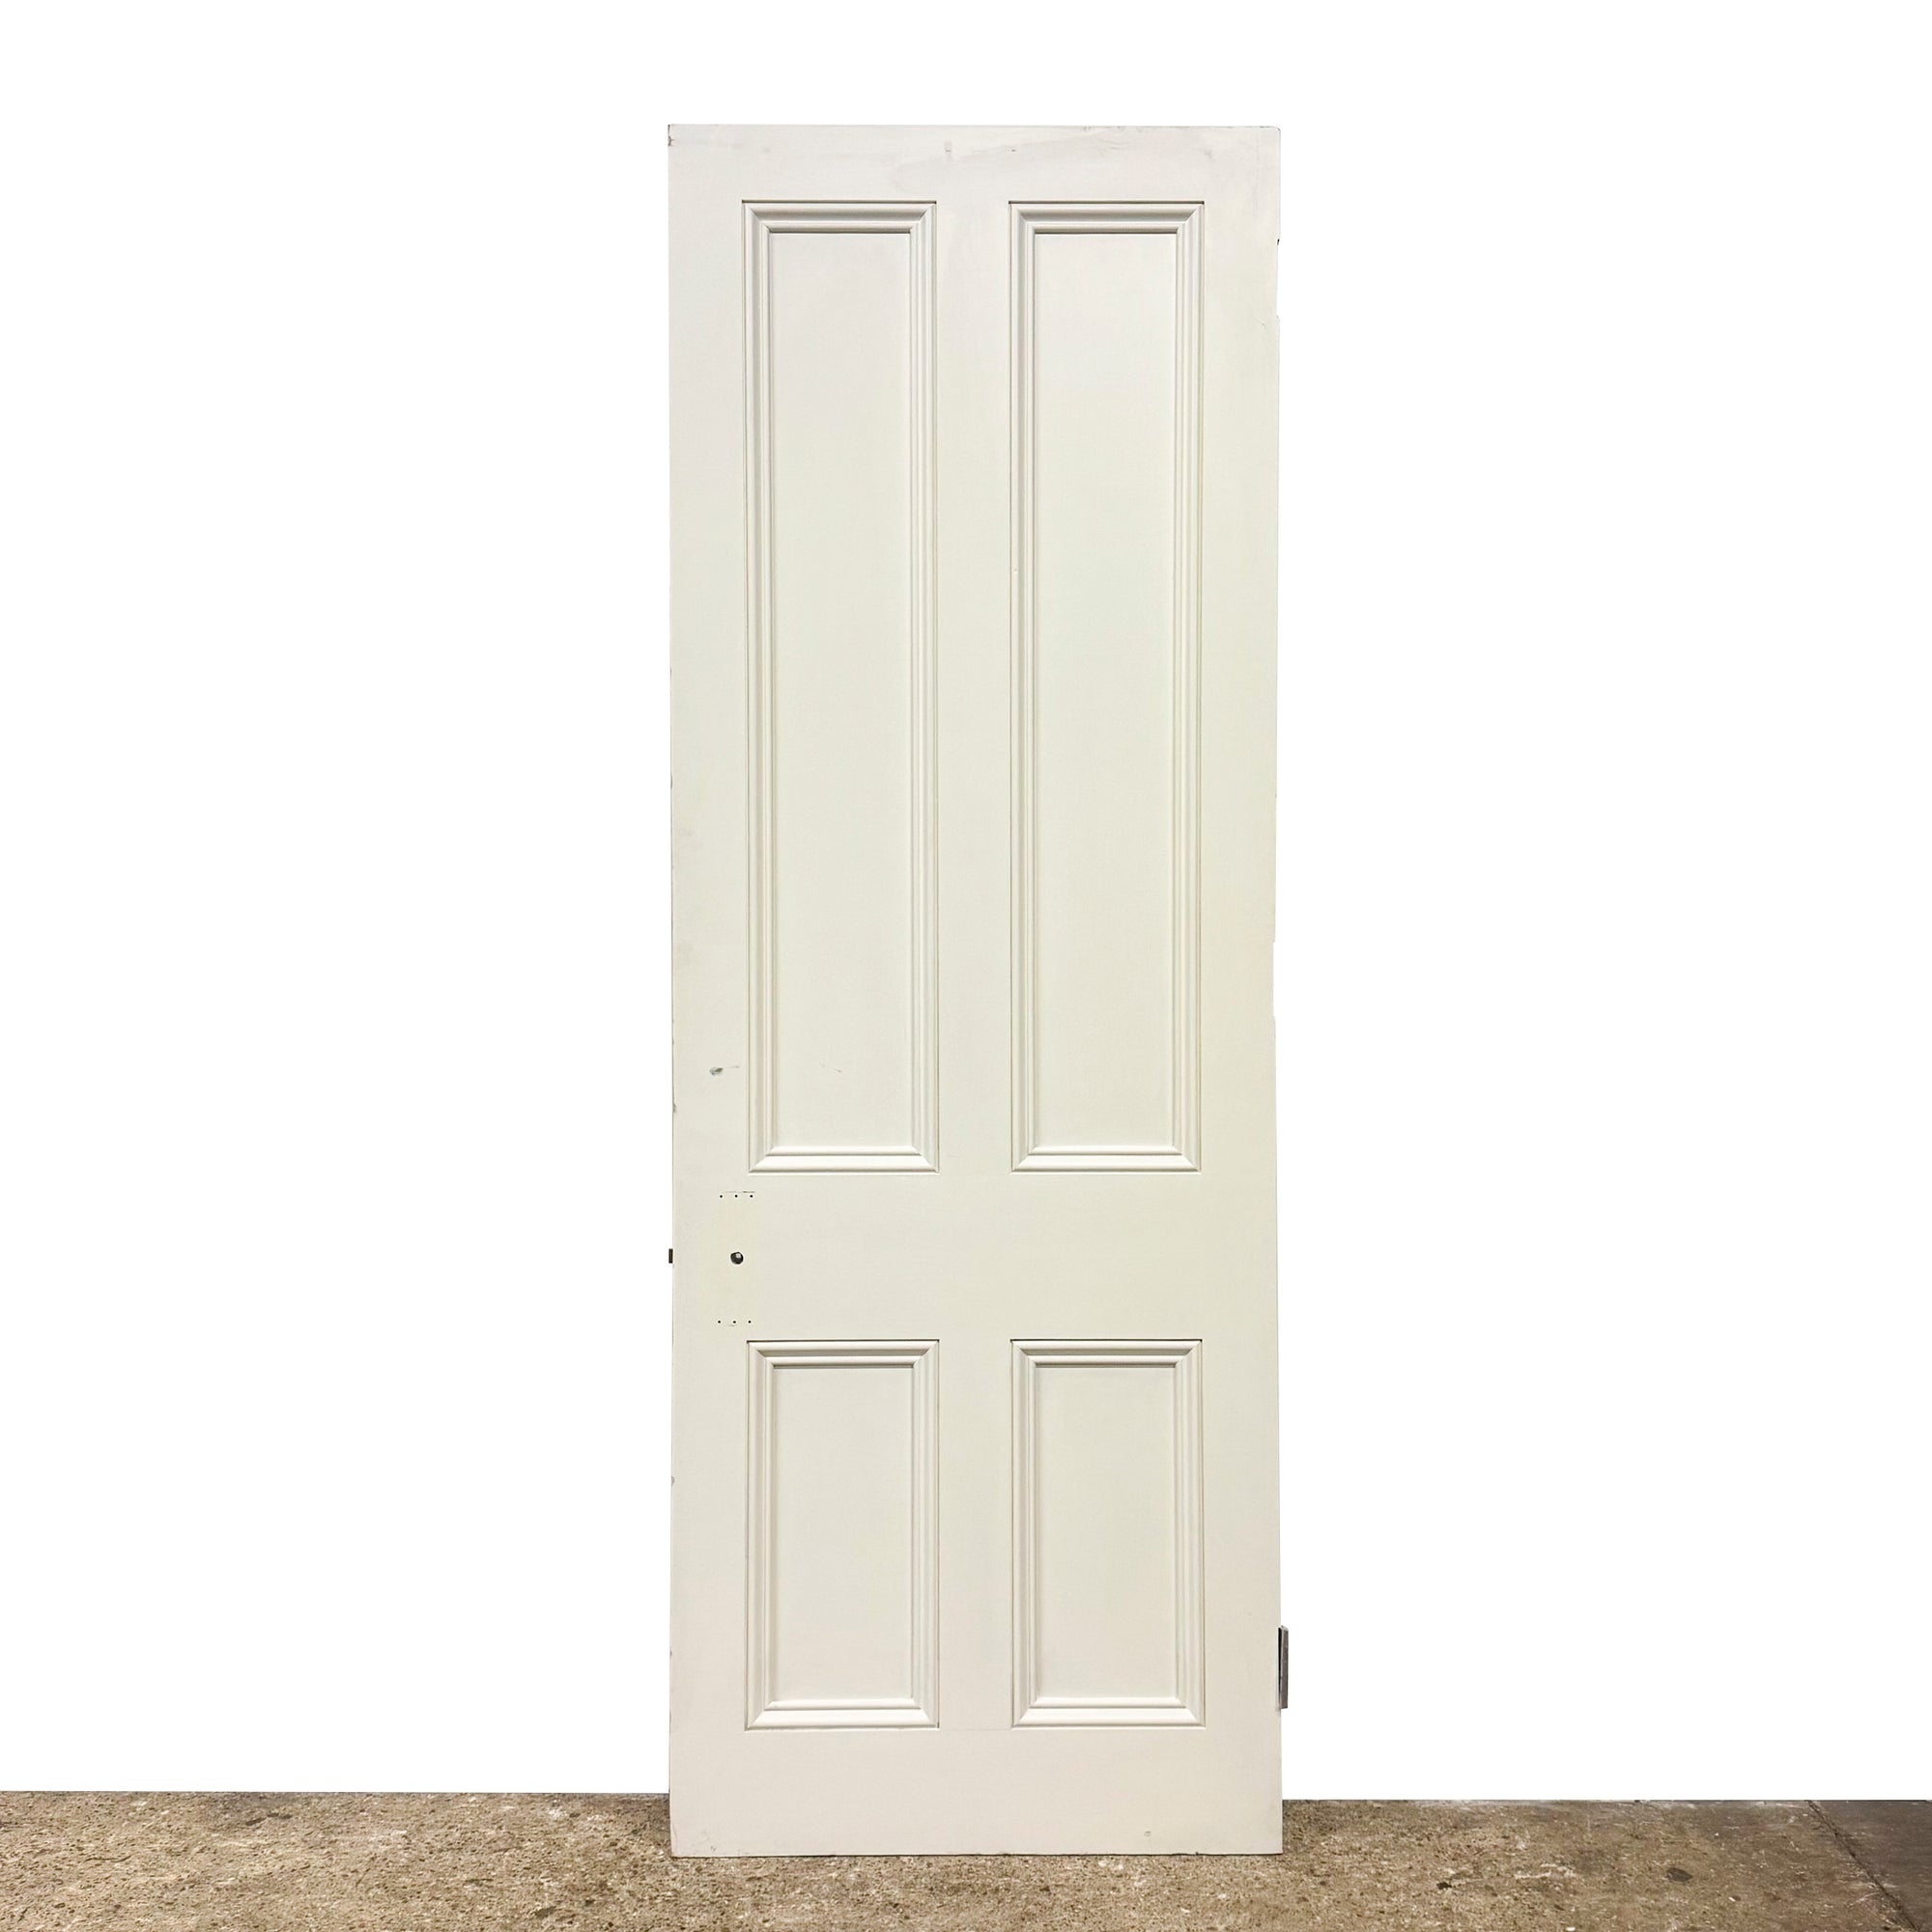 Reclaimed White Tulip Wood 4 Panel Door - 227cm x 80.5cm | The Architectural Forum